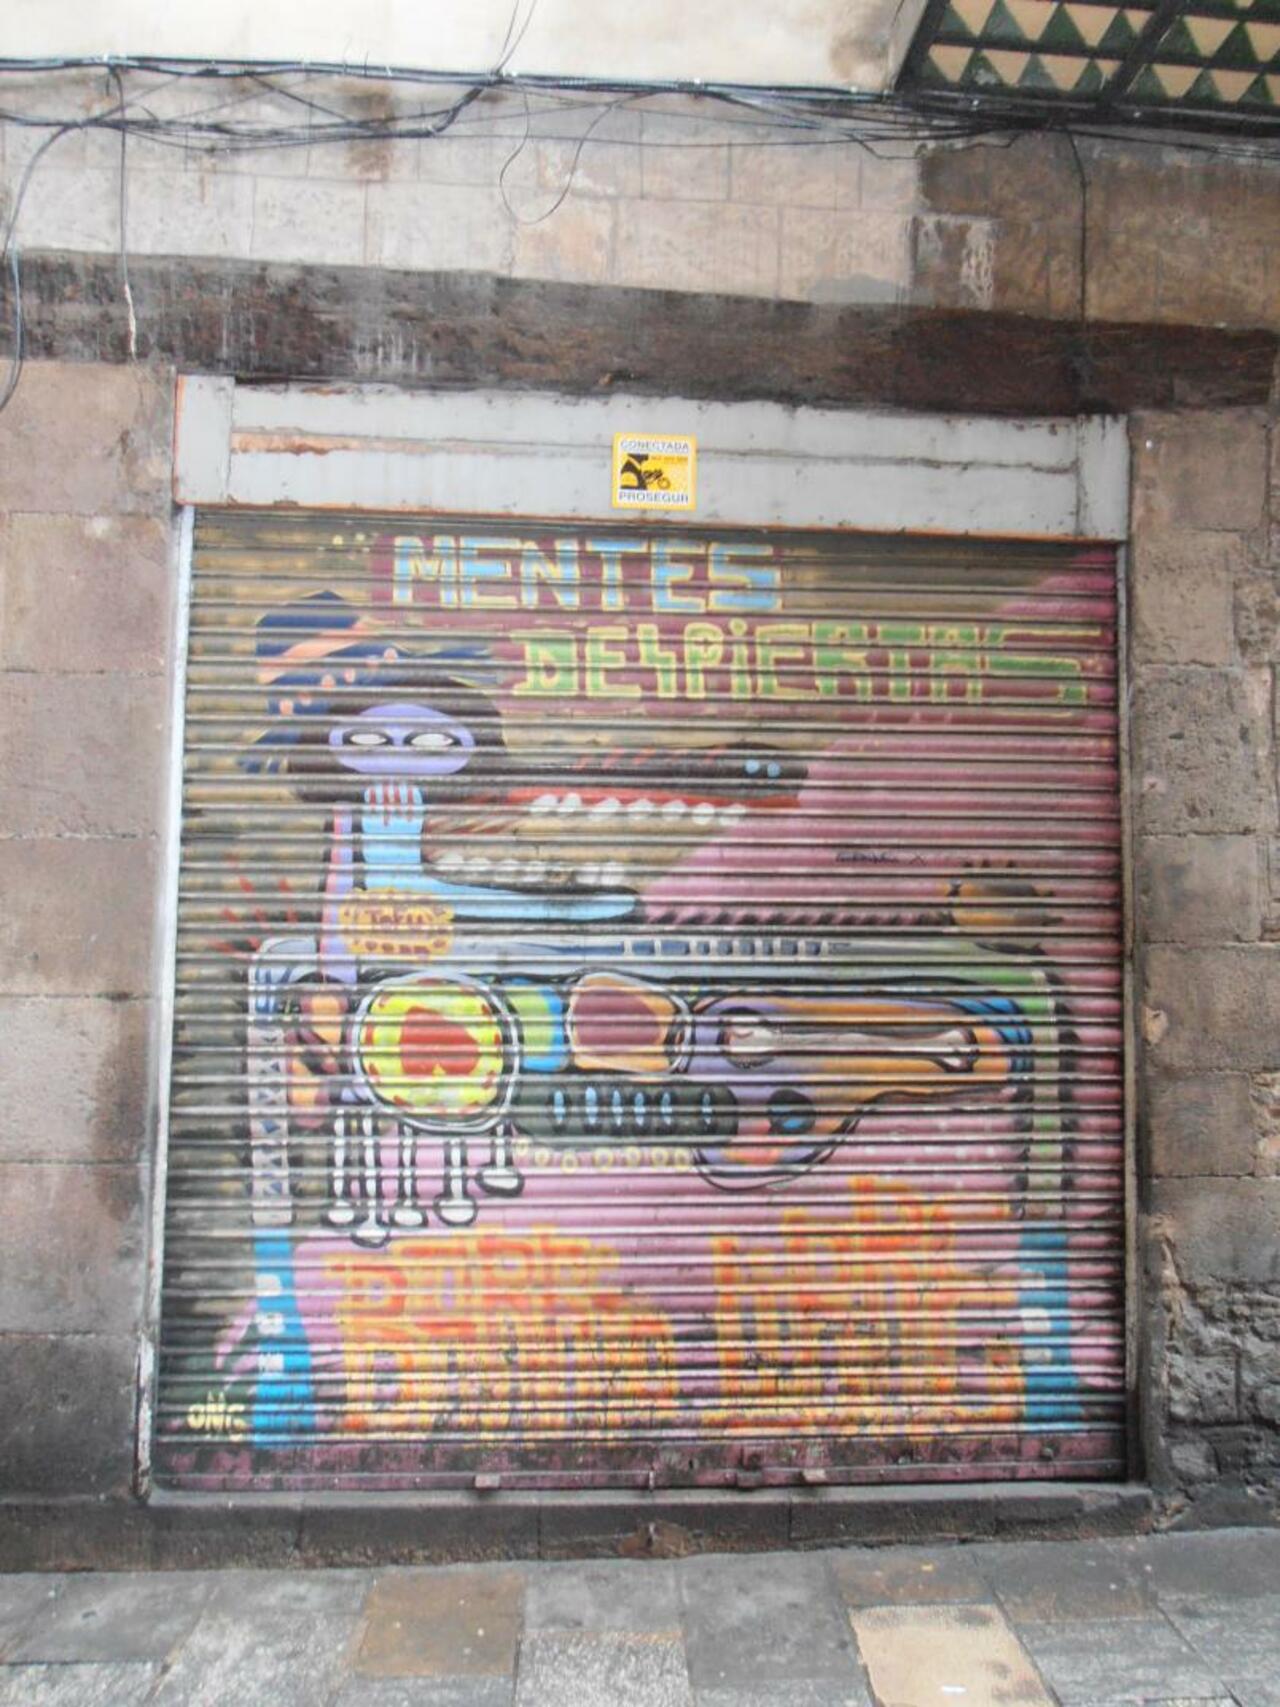 #graffiti #streetart #Barcelona https://t.co/aWa0Ud1d9g